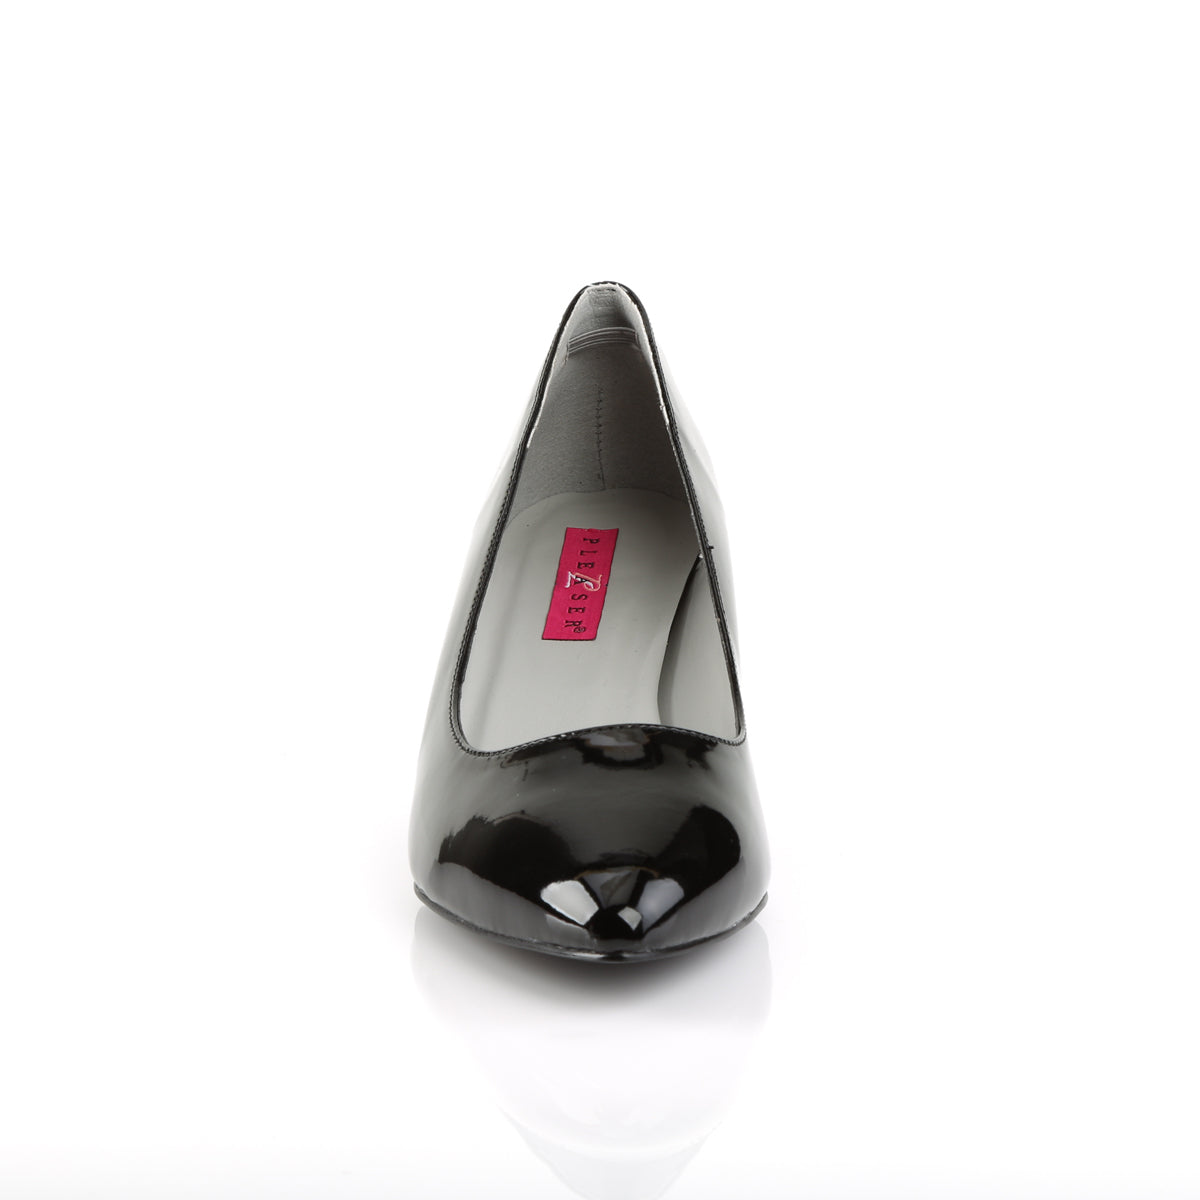 KITTEN-01 Pink Label 2.5 Inch Heel Black Patent Fetish Footwear-Pleaser Pink Label- Drag Queen Shoes